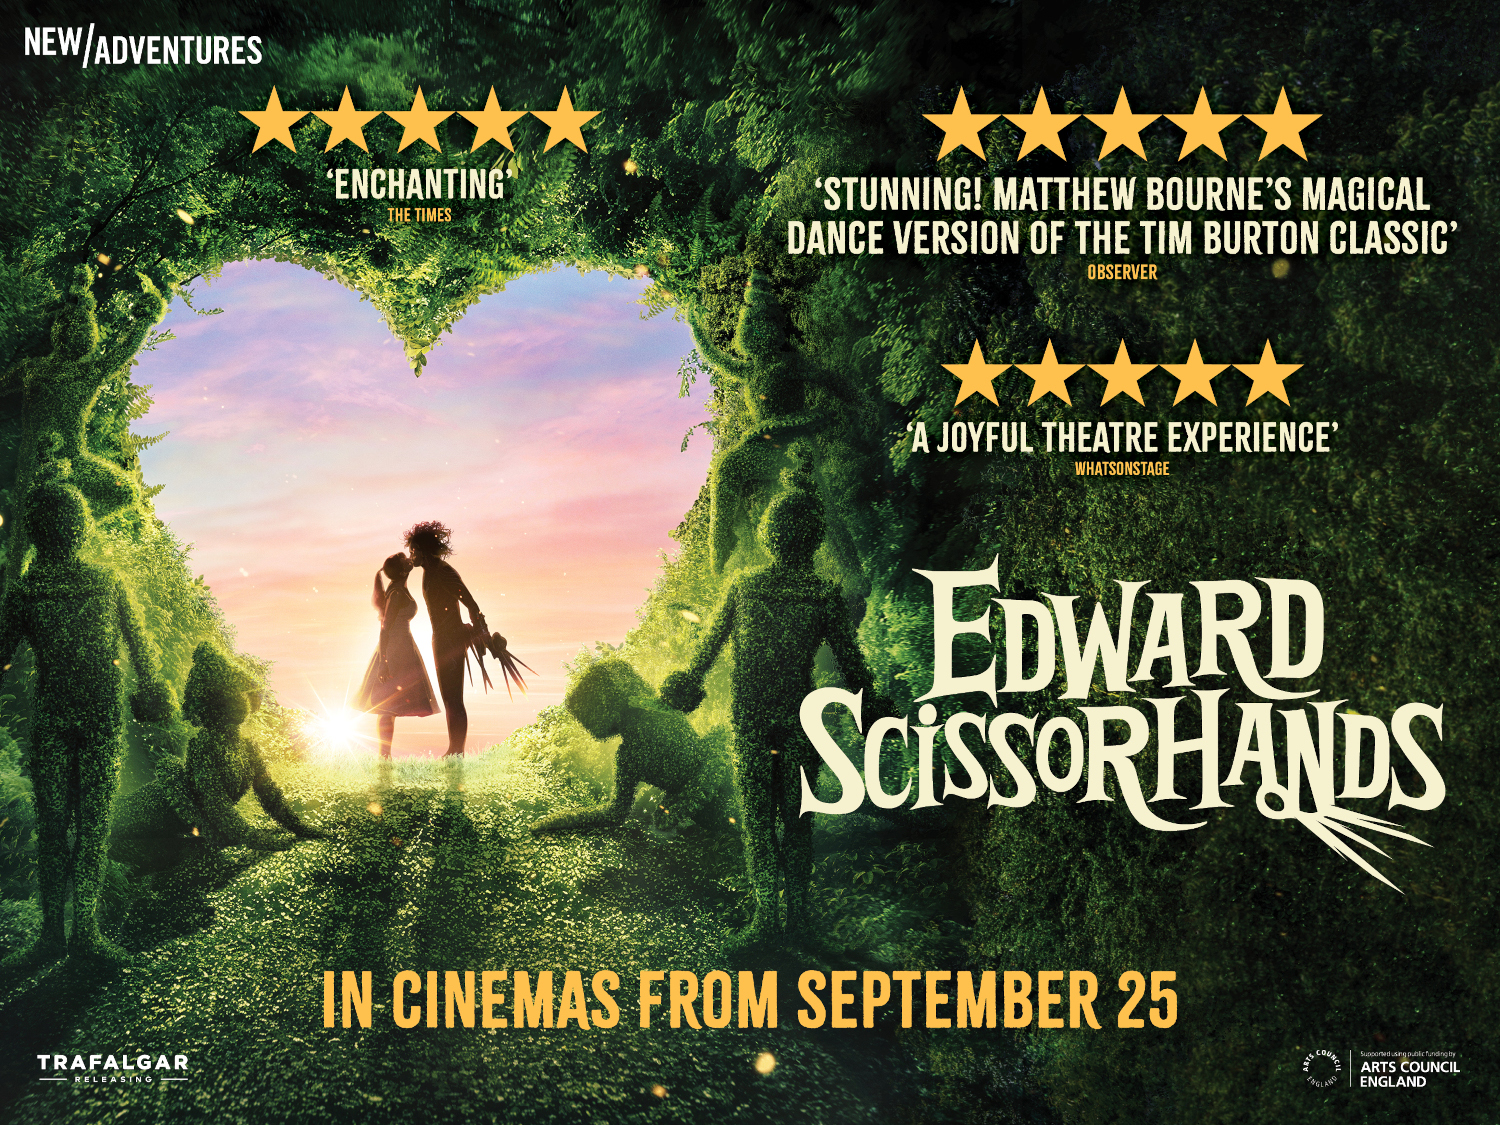 Edward Scissorhands: Matthew Bourne’s dance version of Tim Burton’s classic – Event Screening